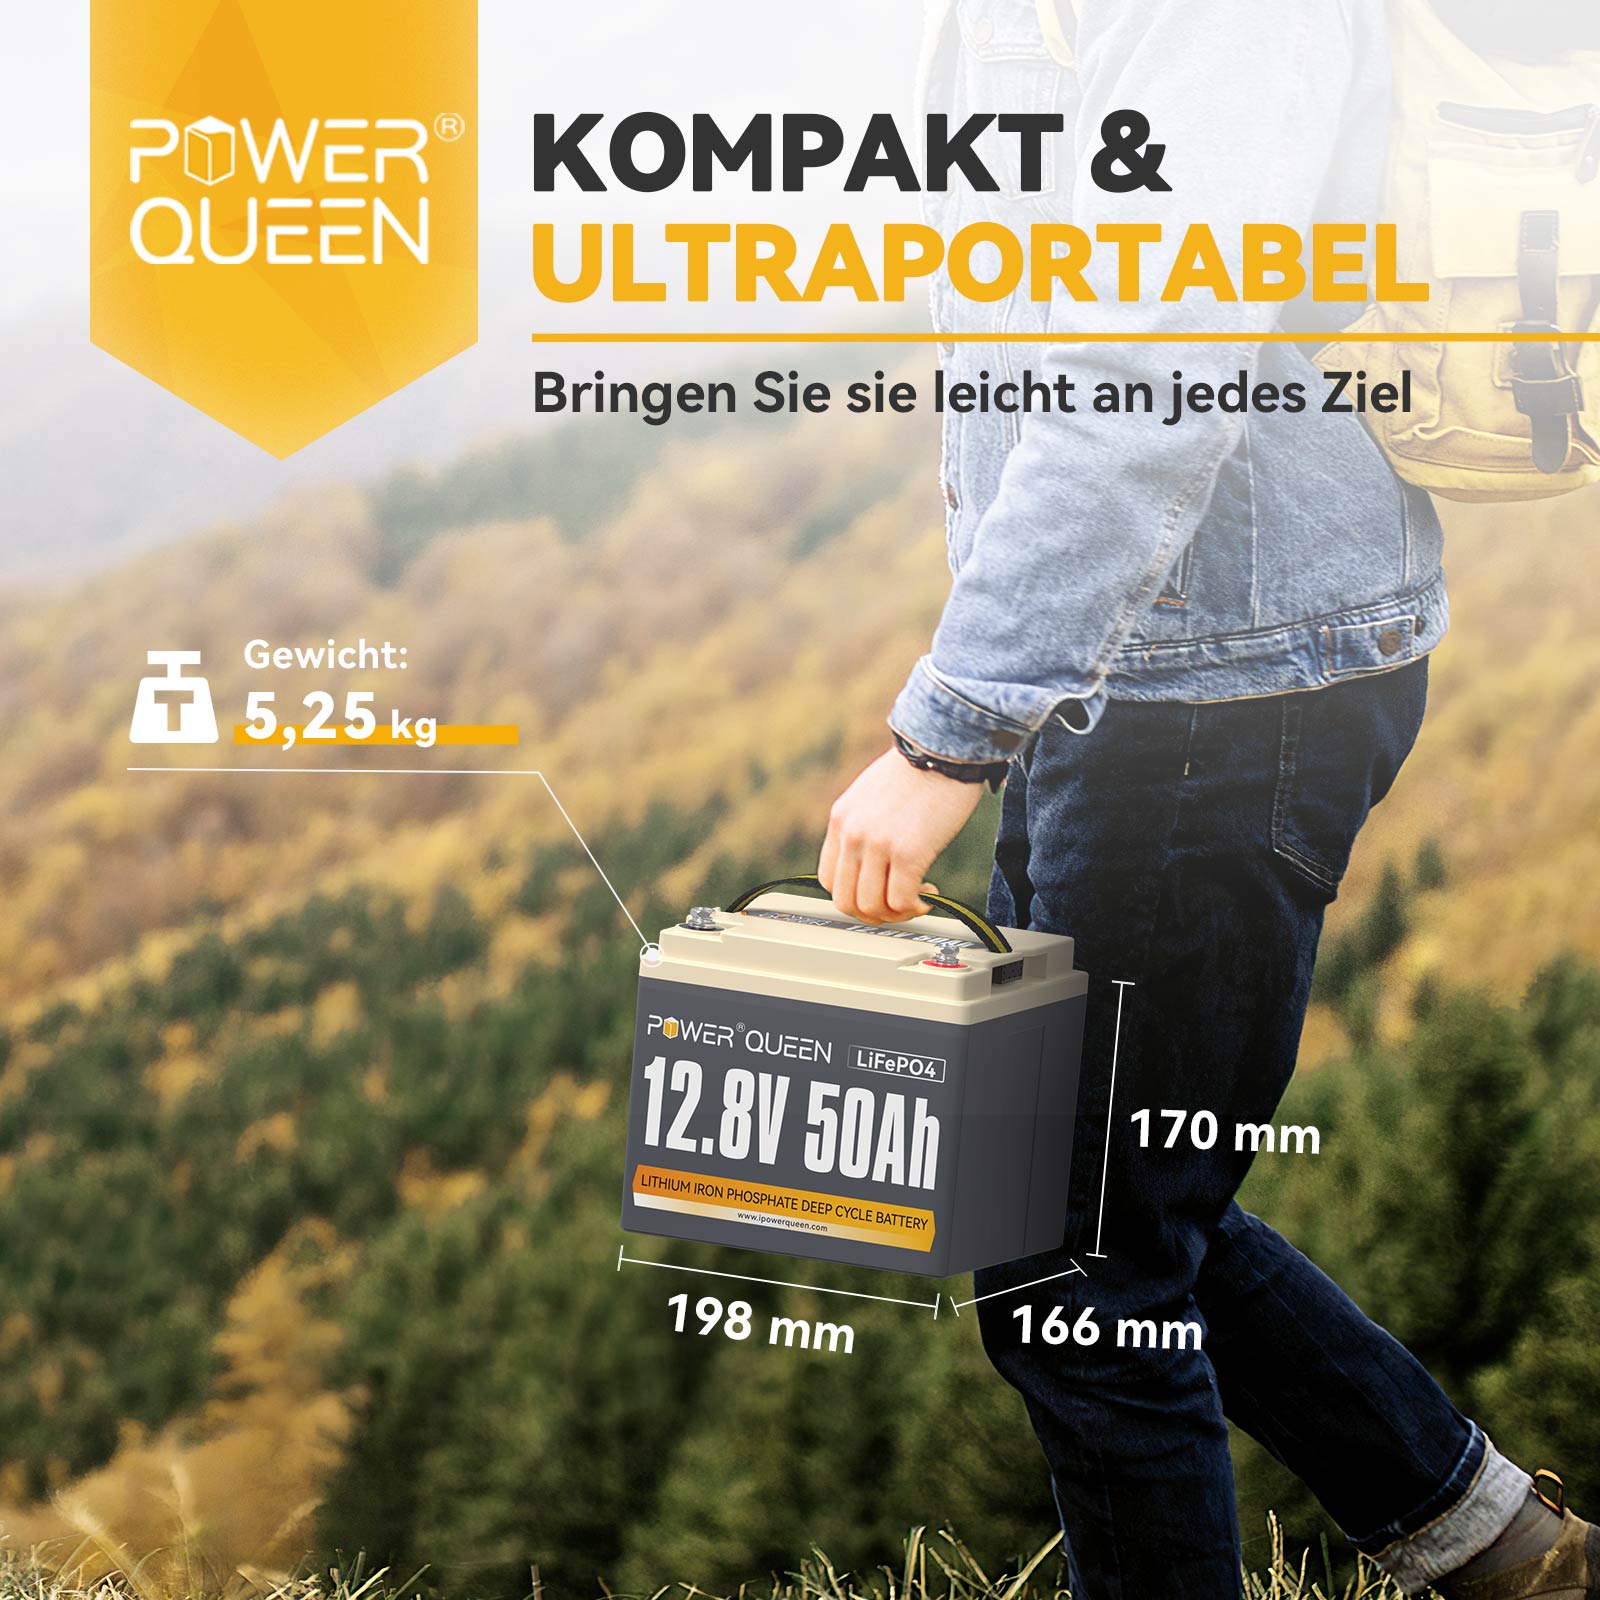 【0% IVA】Batteria Power Queen 12,8 V 50 Ah LiFePO4, BMS integrato da 50 A